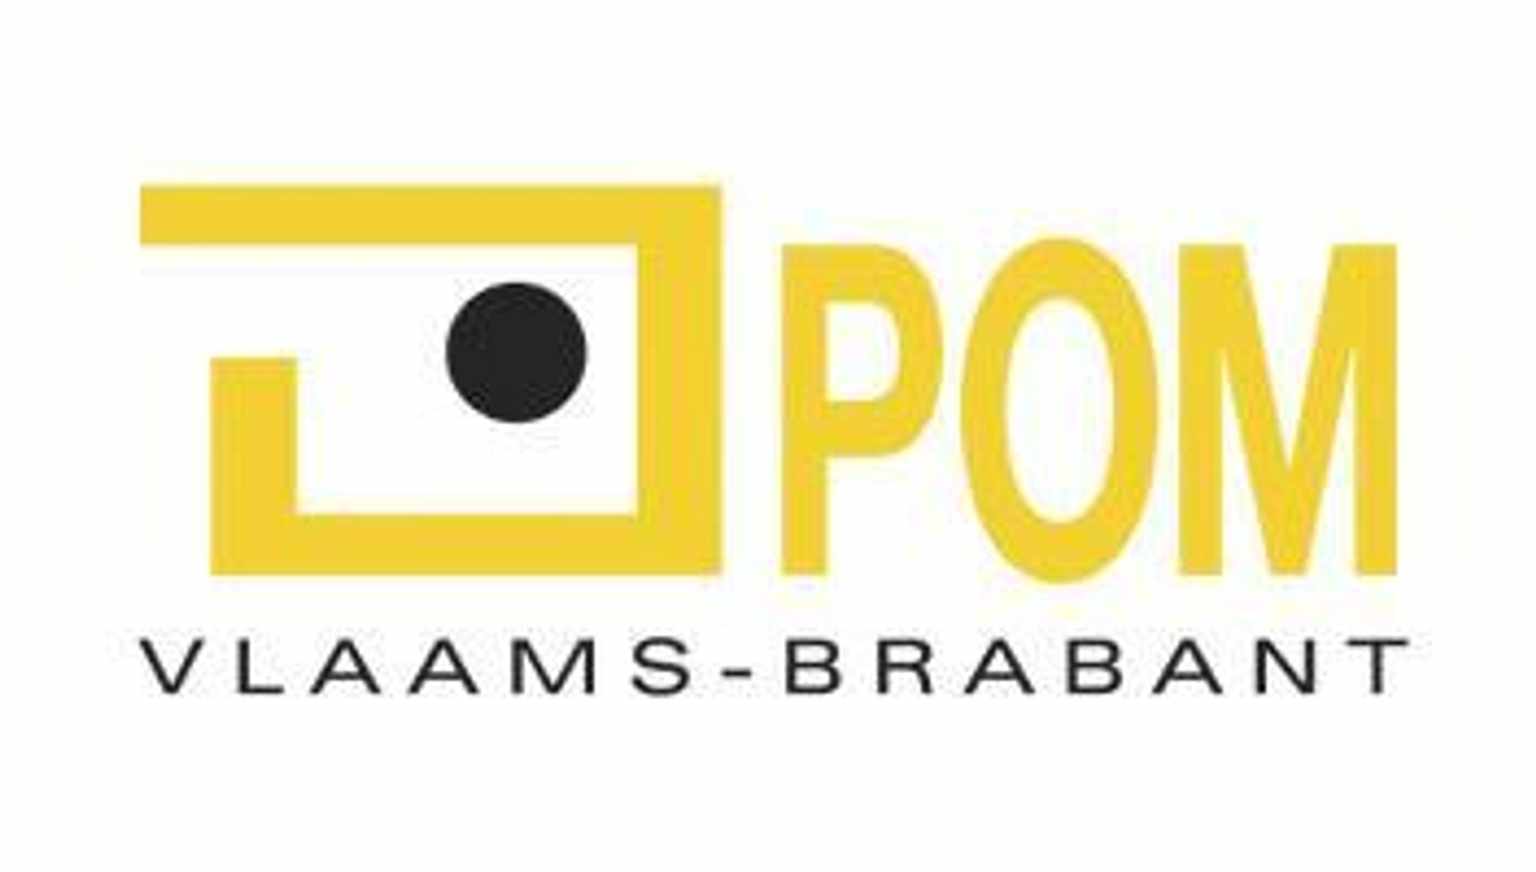 POM Vlaams-Brabant